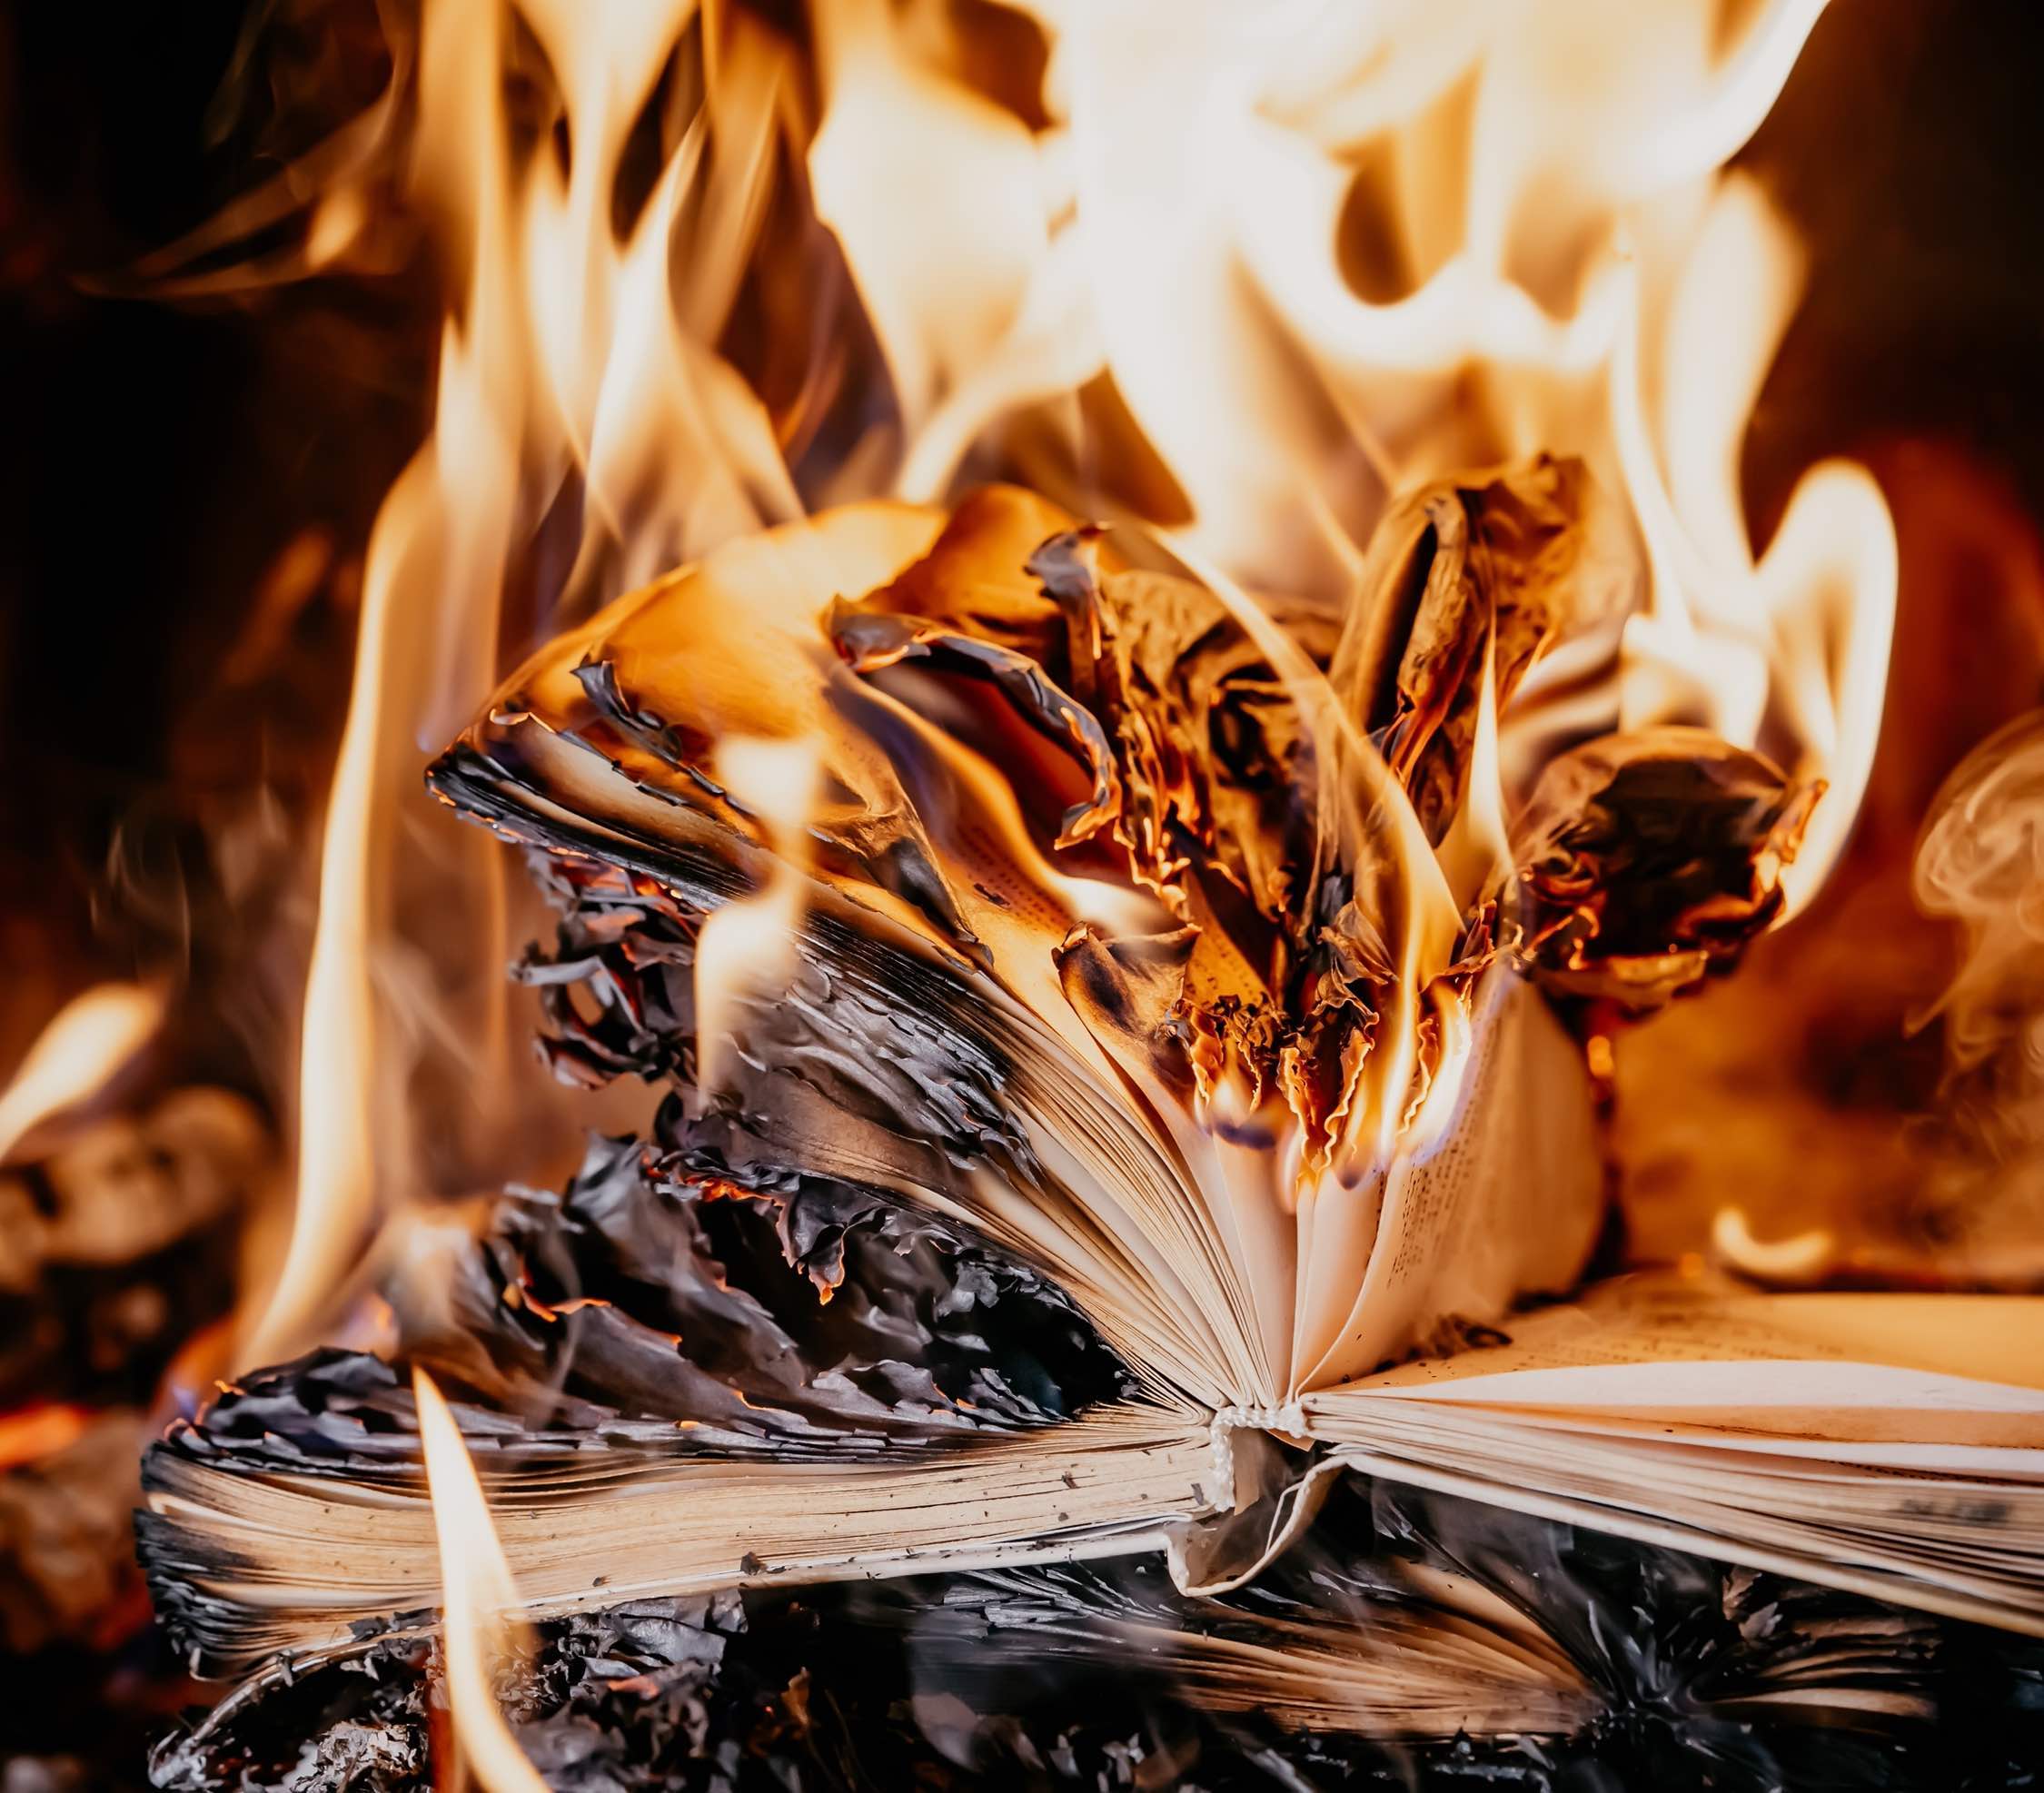 Paper Book Burning in Fire